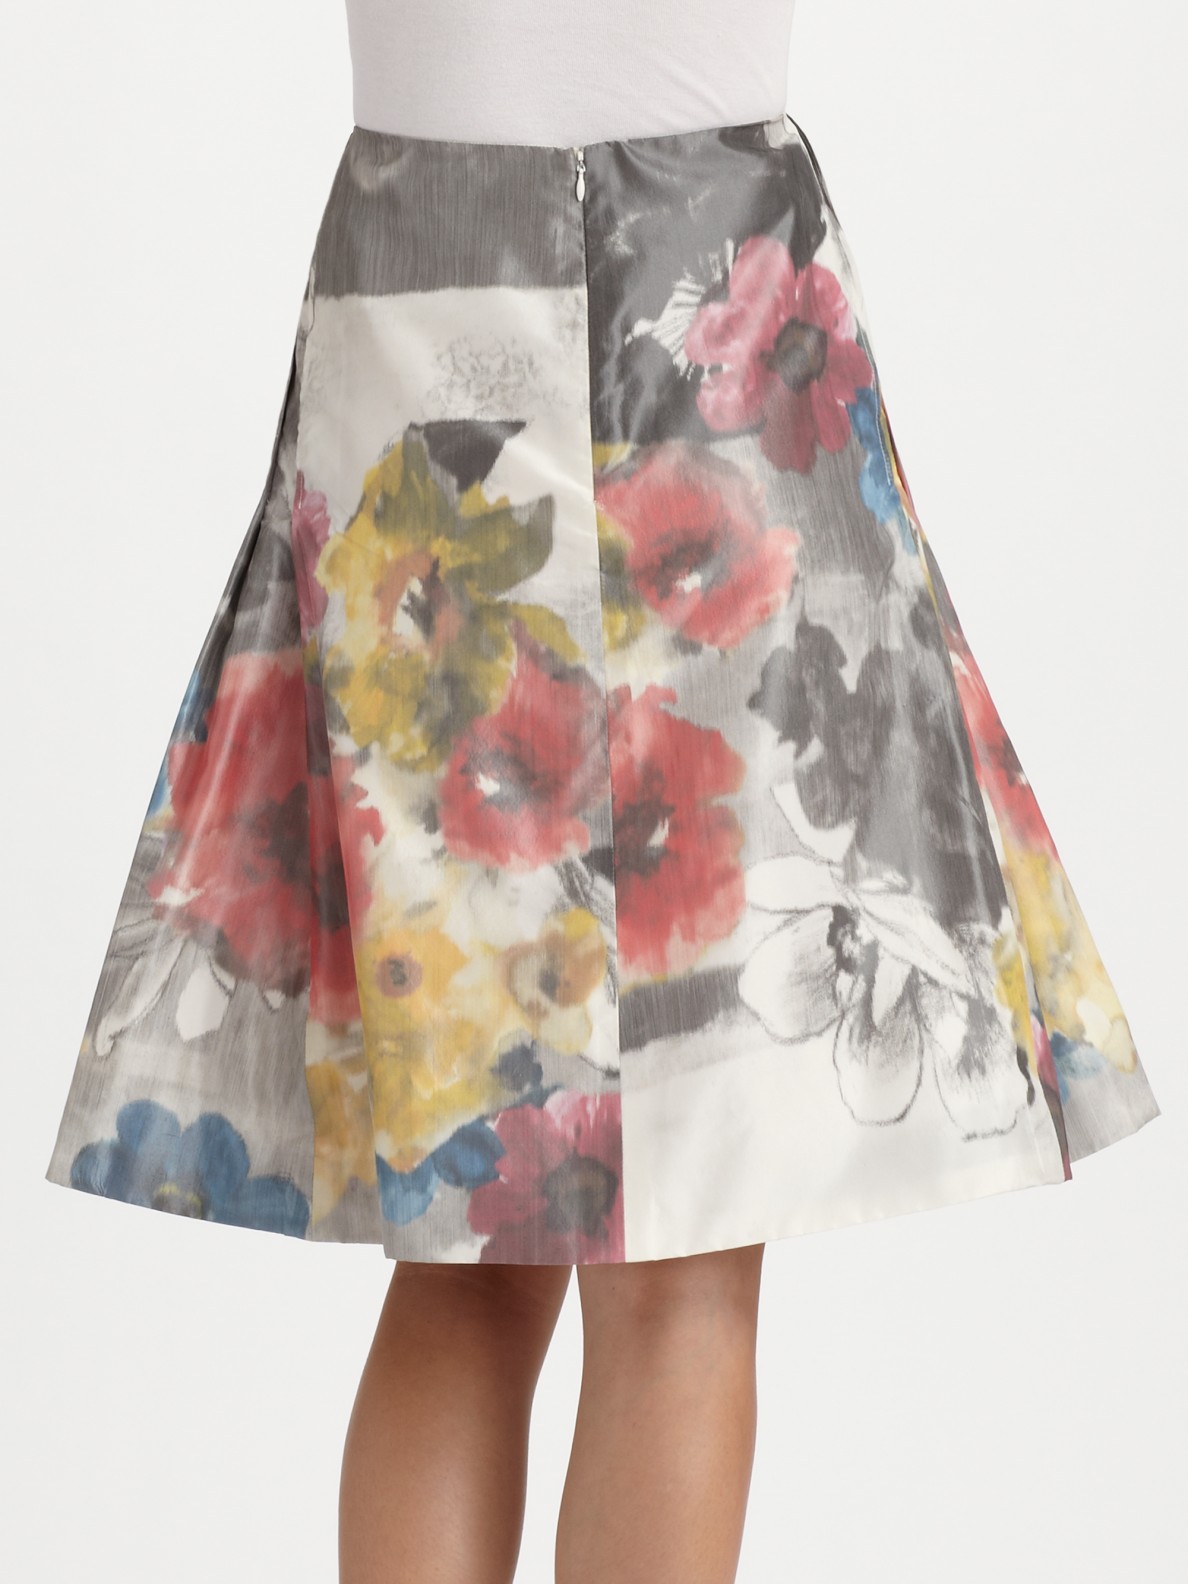 Lyst - Carolina Herrera Floral Print Taffeta Party Skirt